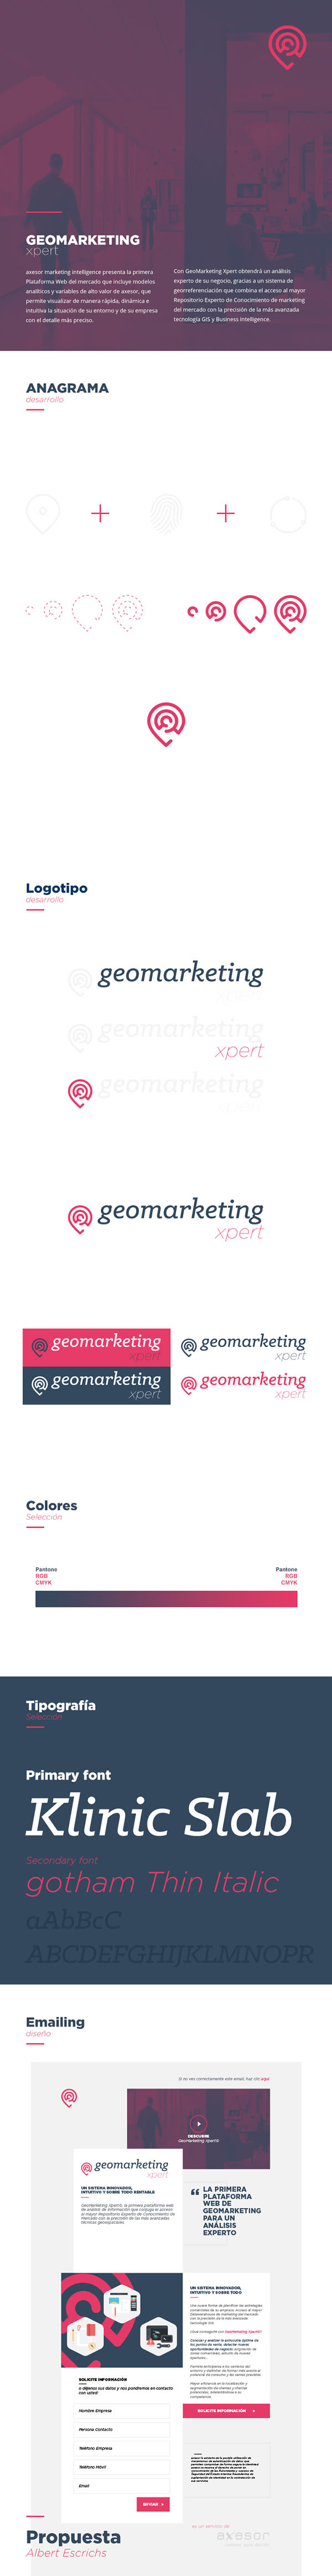 Geomarketing xpert -1